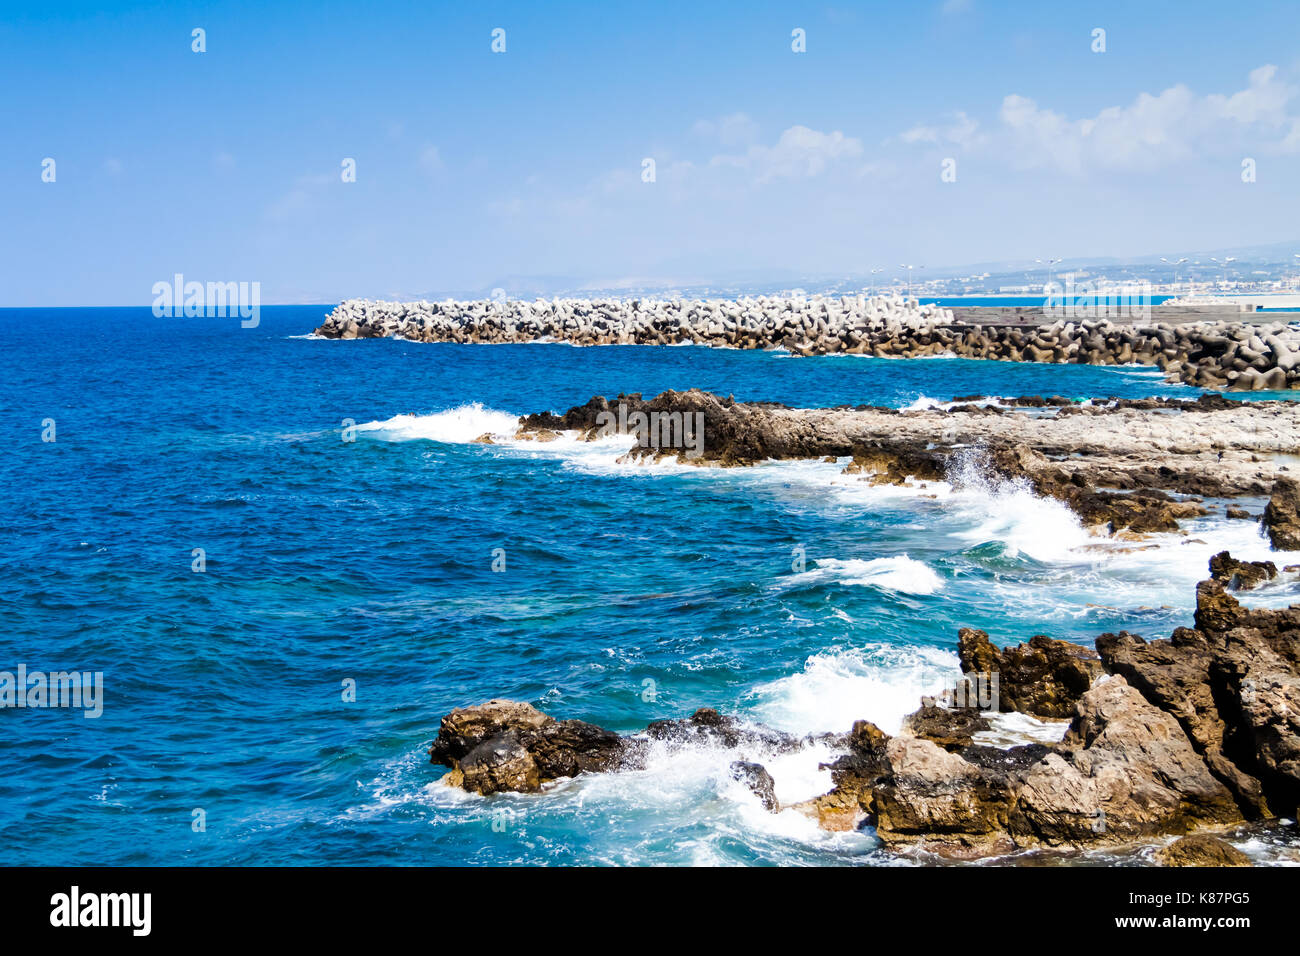 Waves breaking on the rocky coast of the Mediterranean Sea near the Venetian Fortress (Fortezza) of Rethymno. Coast of Kolpos Almirou, Crete, Greece Stock Photo